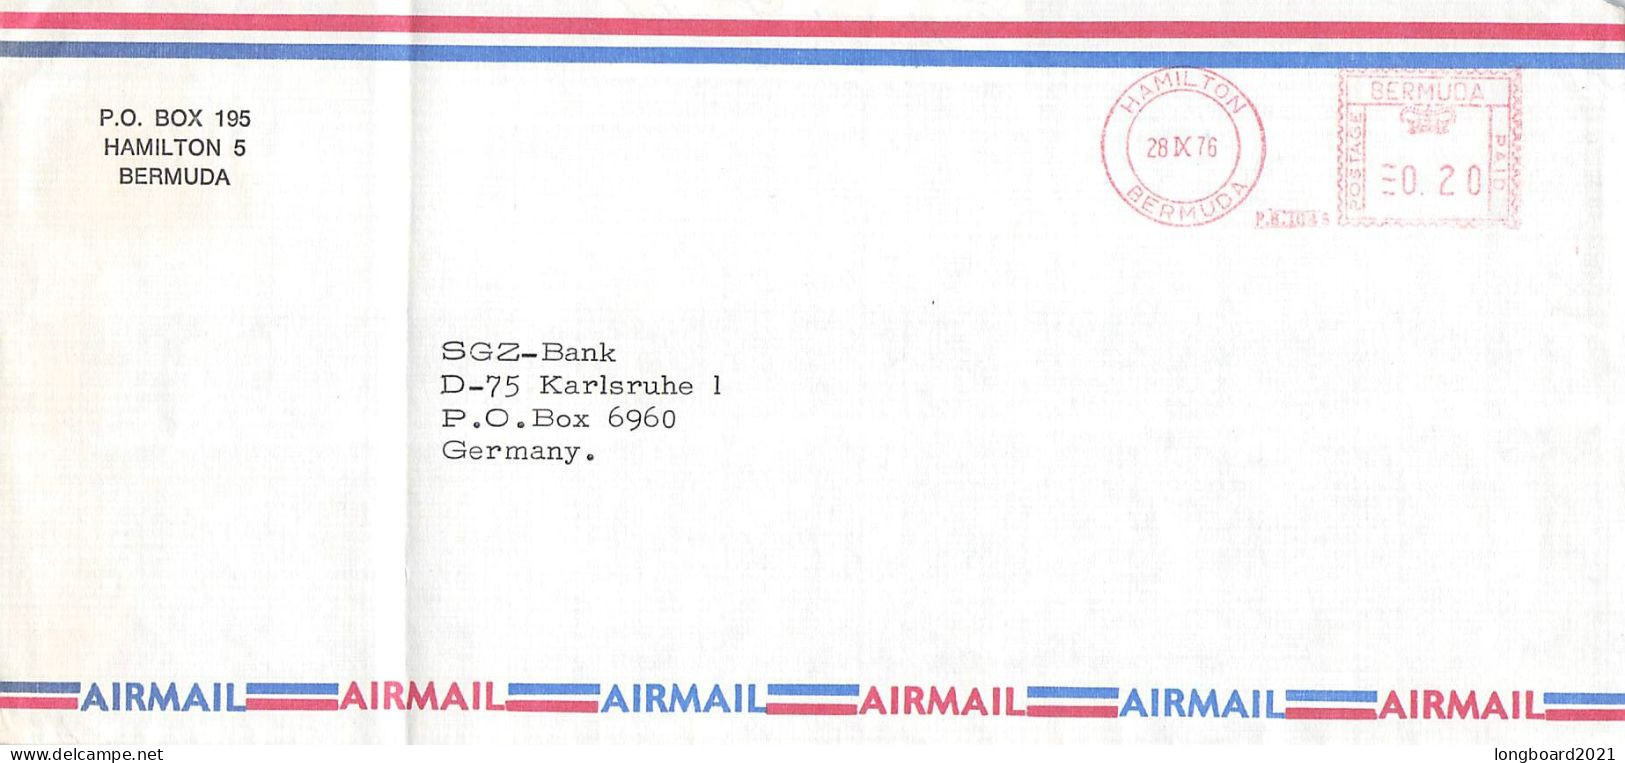 BERMUDA - AIRMAIL 1976 - KARLSRUHE/DE -METER- / 5167 - Bermudas